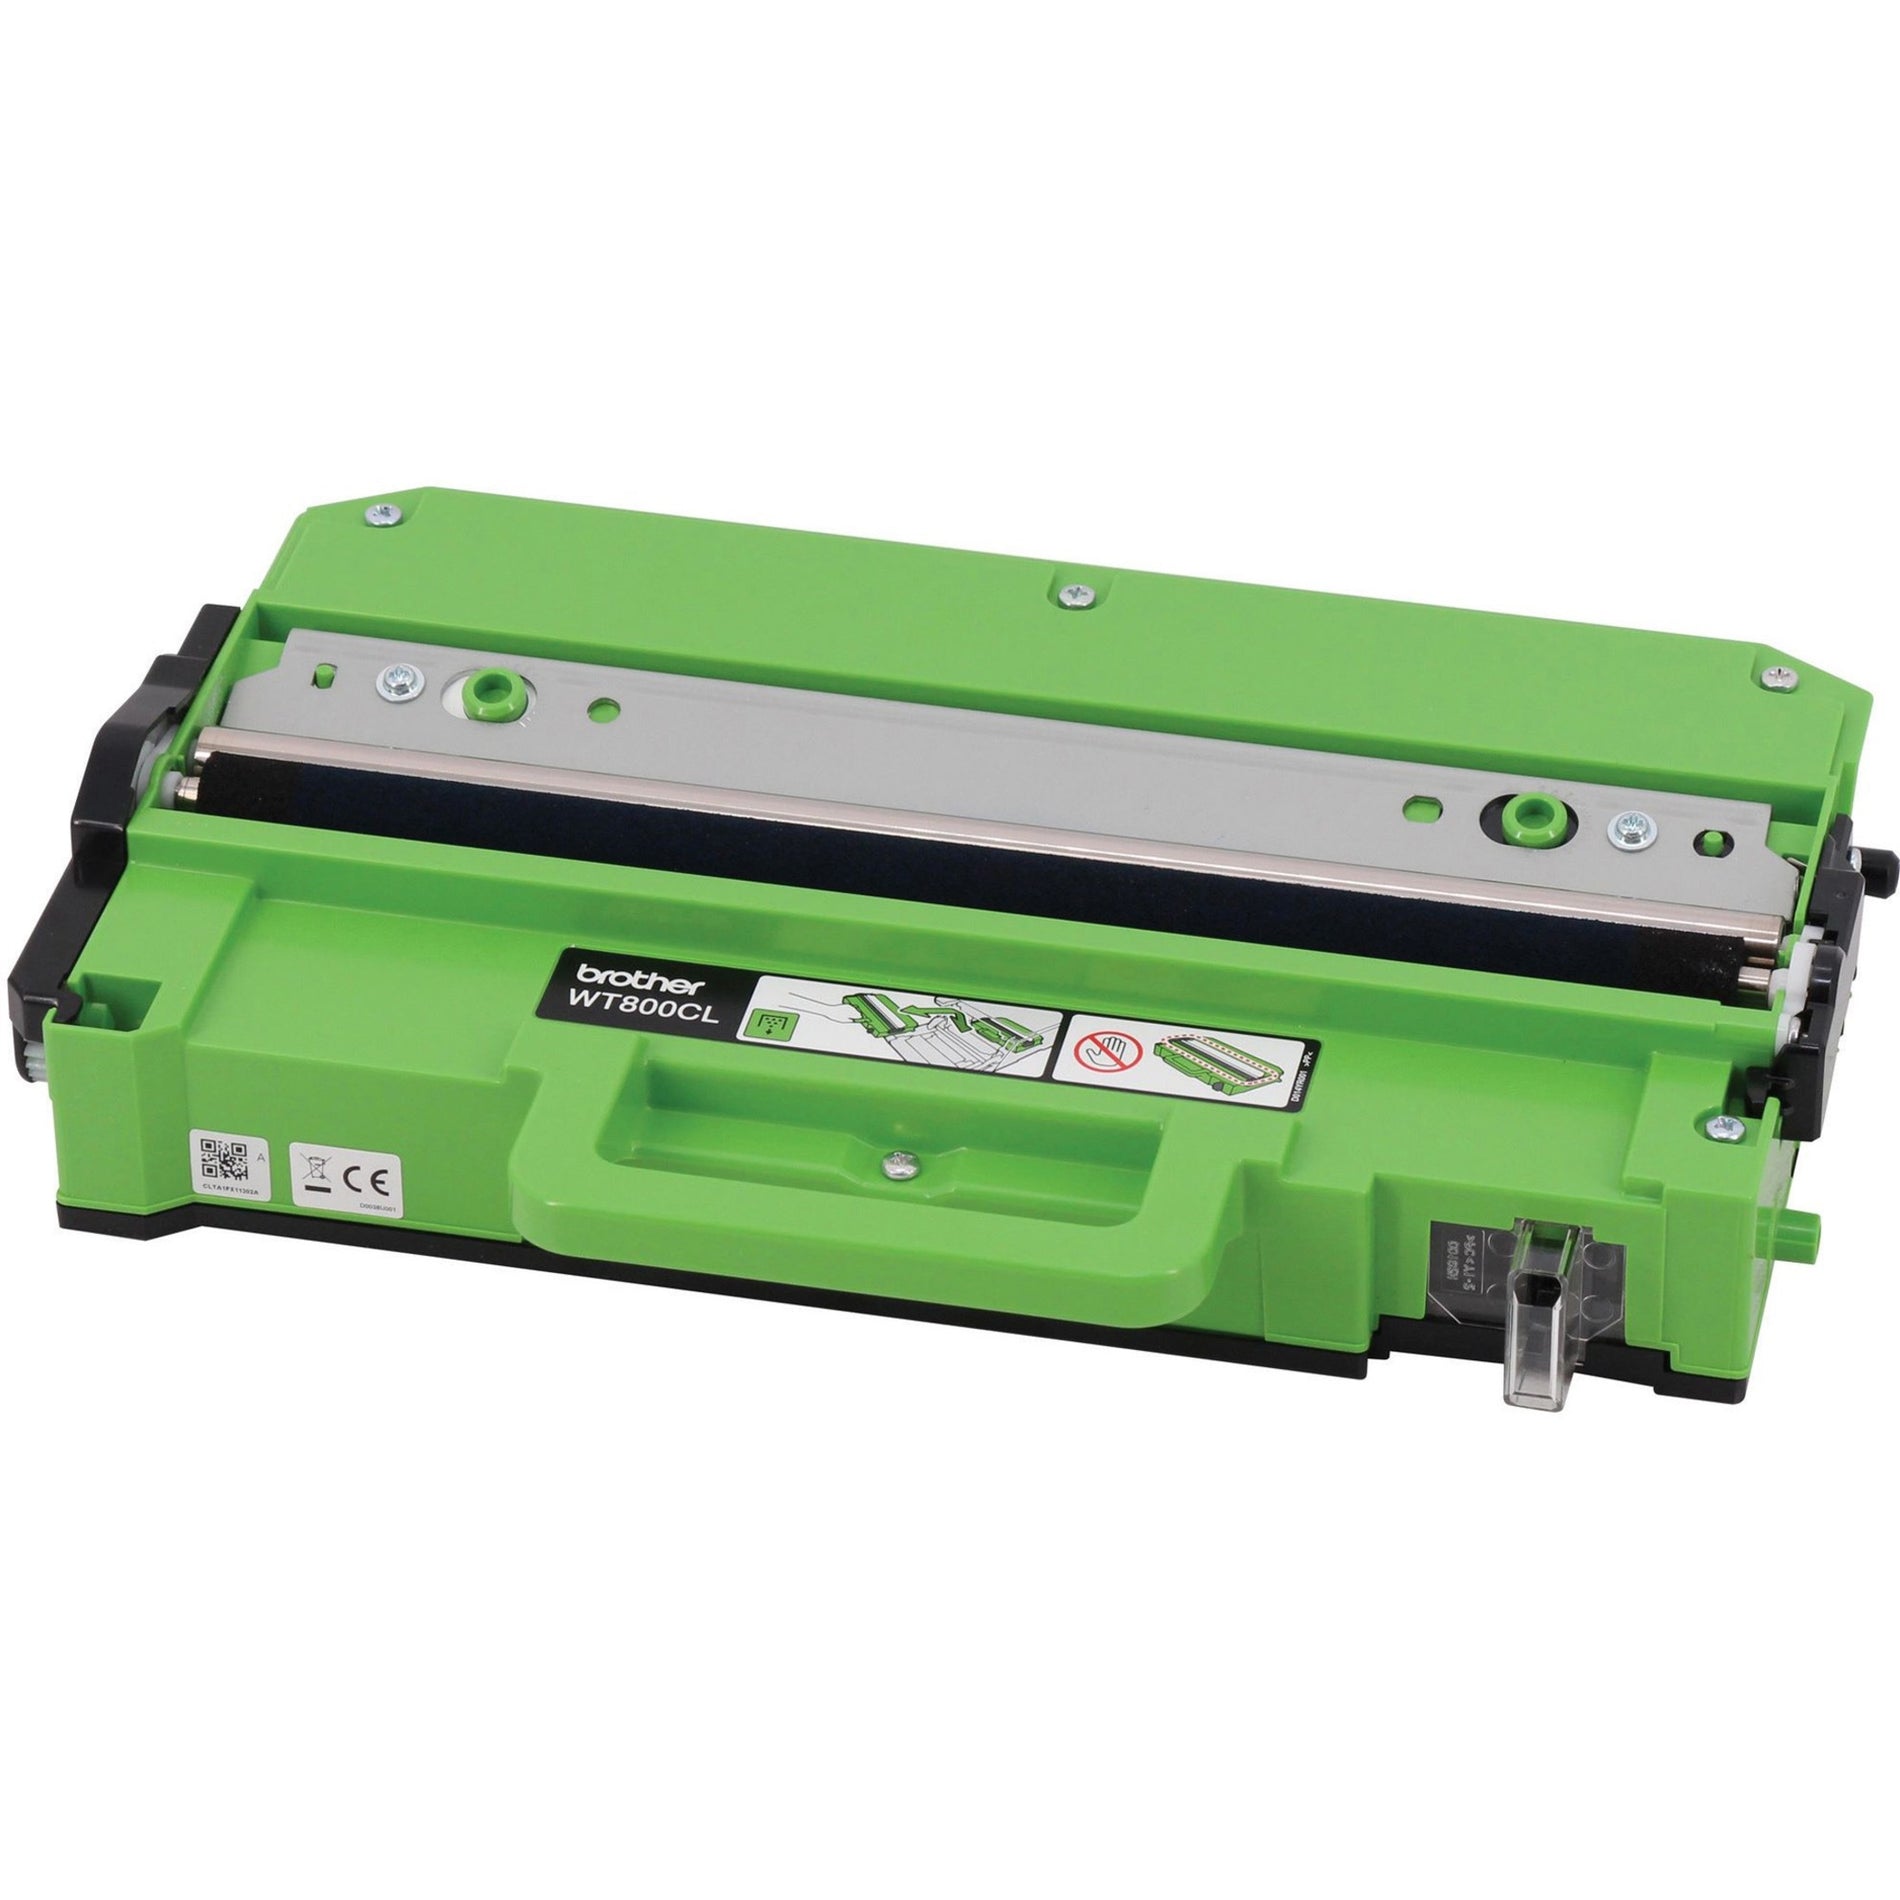 Brother WT800CL Abfalltonerbehälter - Hochleistung Laserdrucker Abfallbehälter 